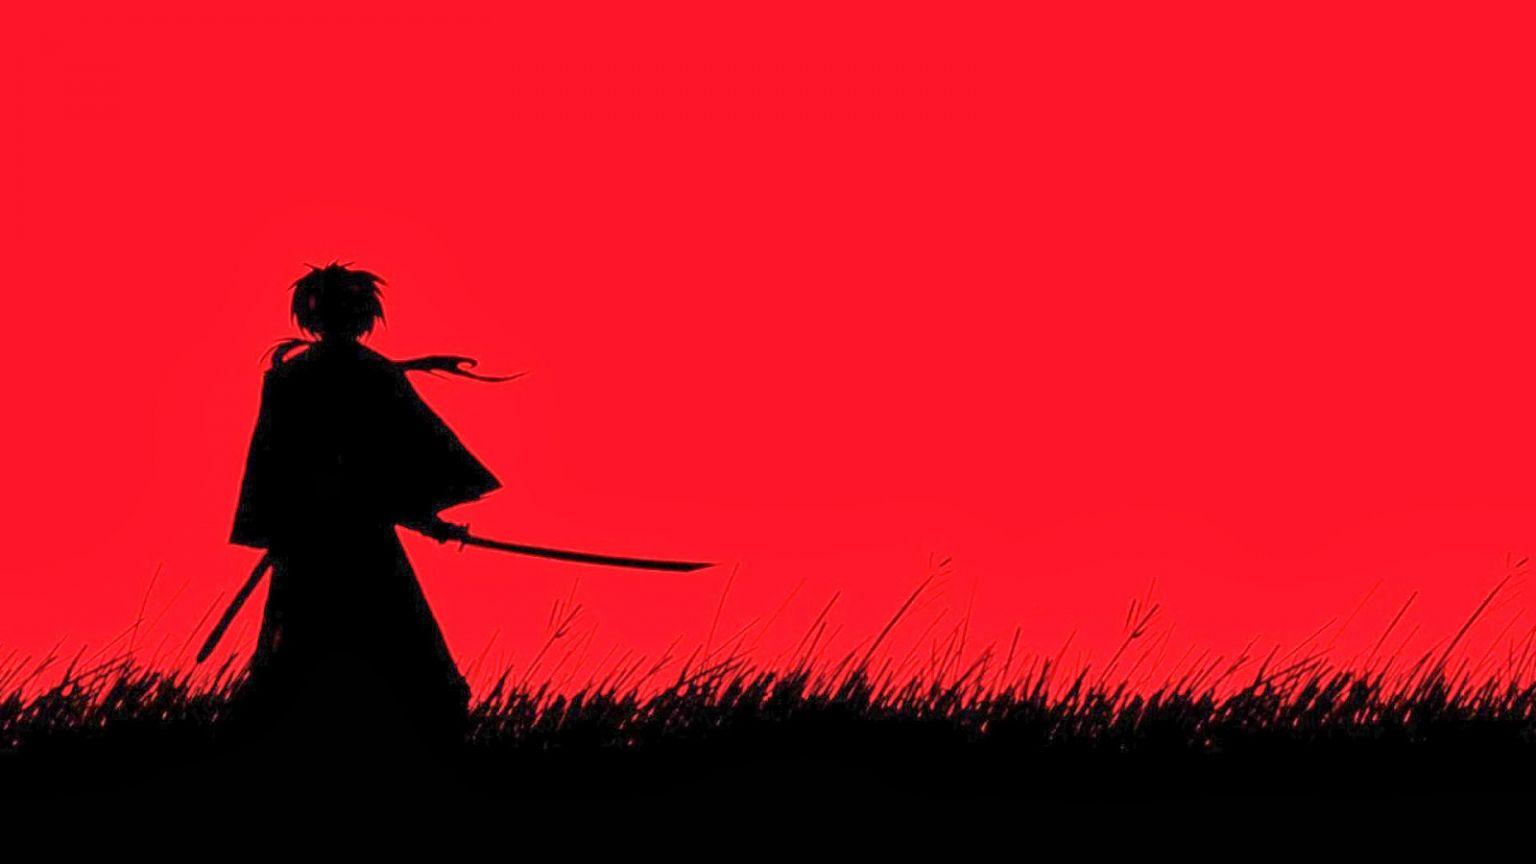 Red Samurai Art Wallpapers - Top Free Red Samurai Art Backgrounds